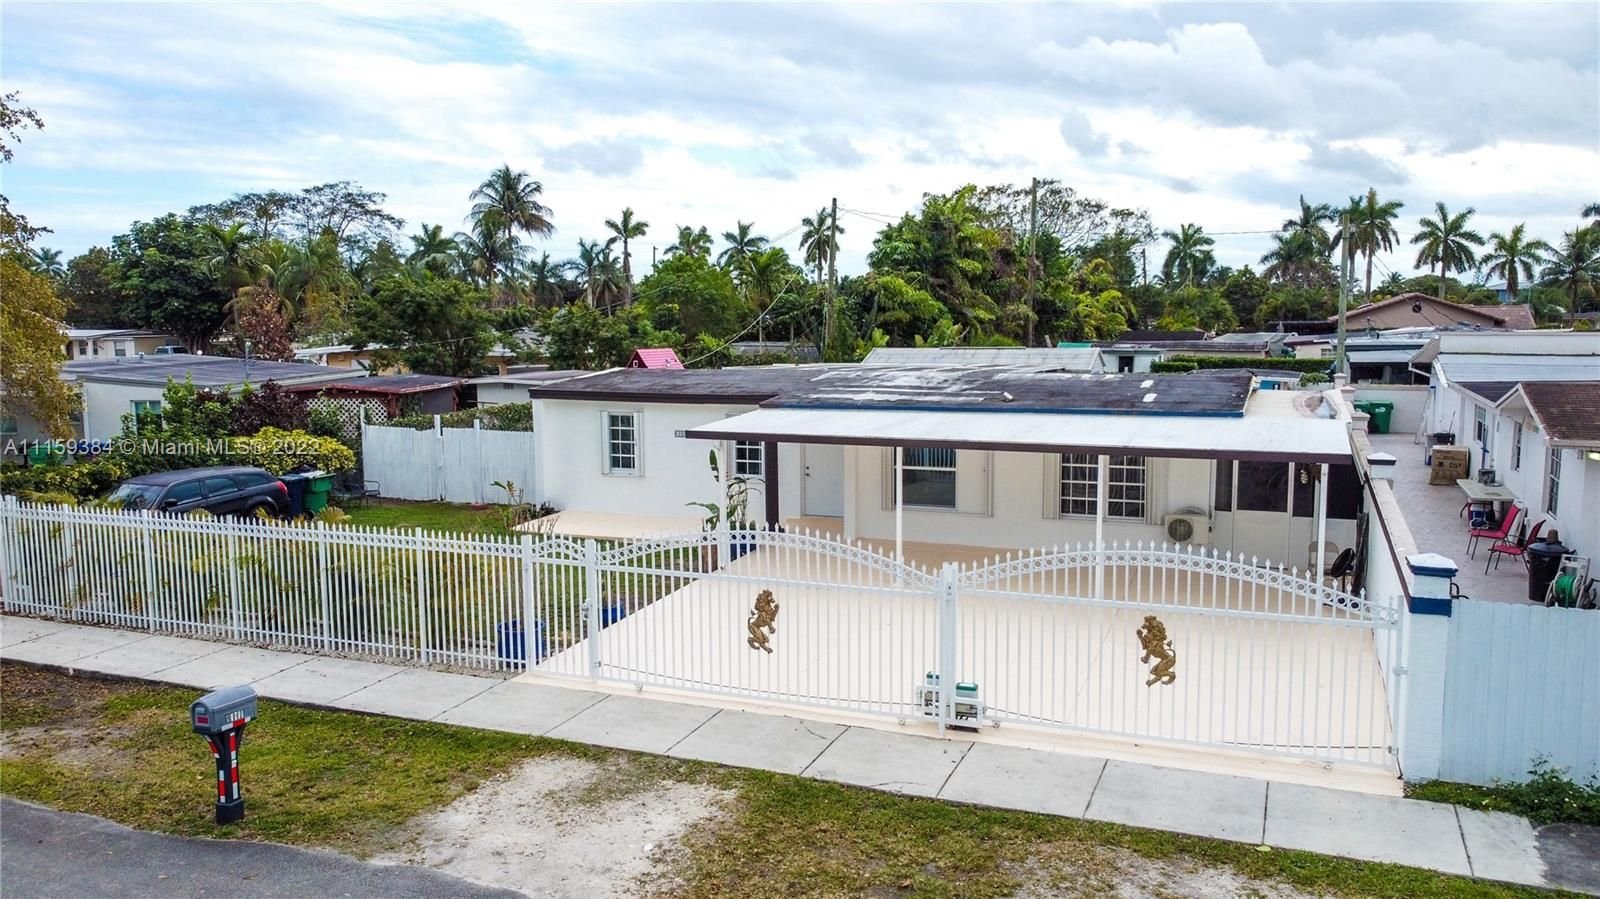 Real estate property located at 10020 46th Ter, Miami-Dade County, Miami, FL